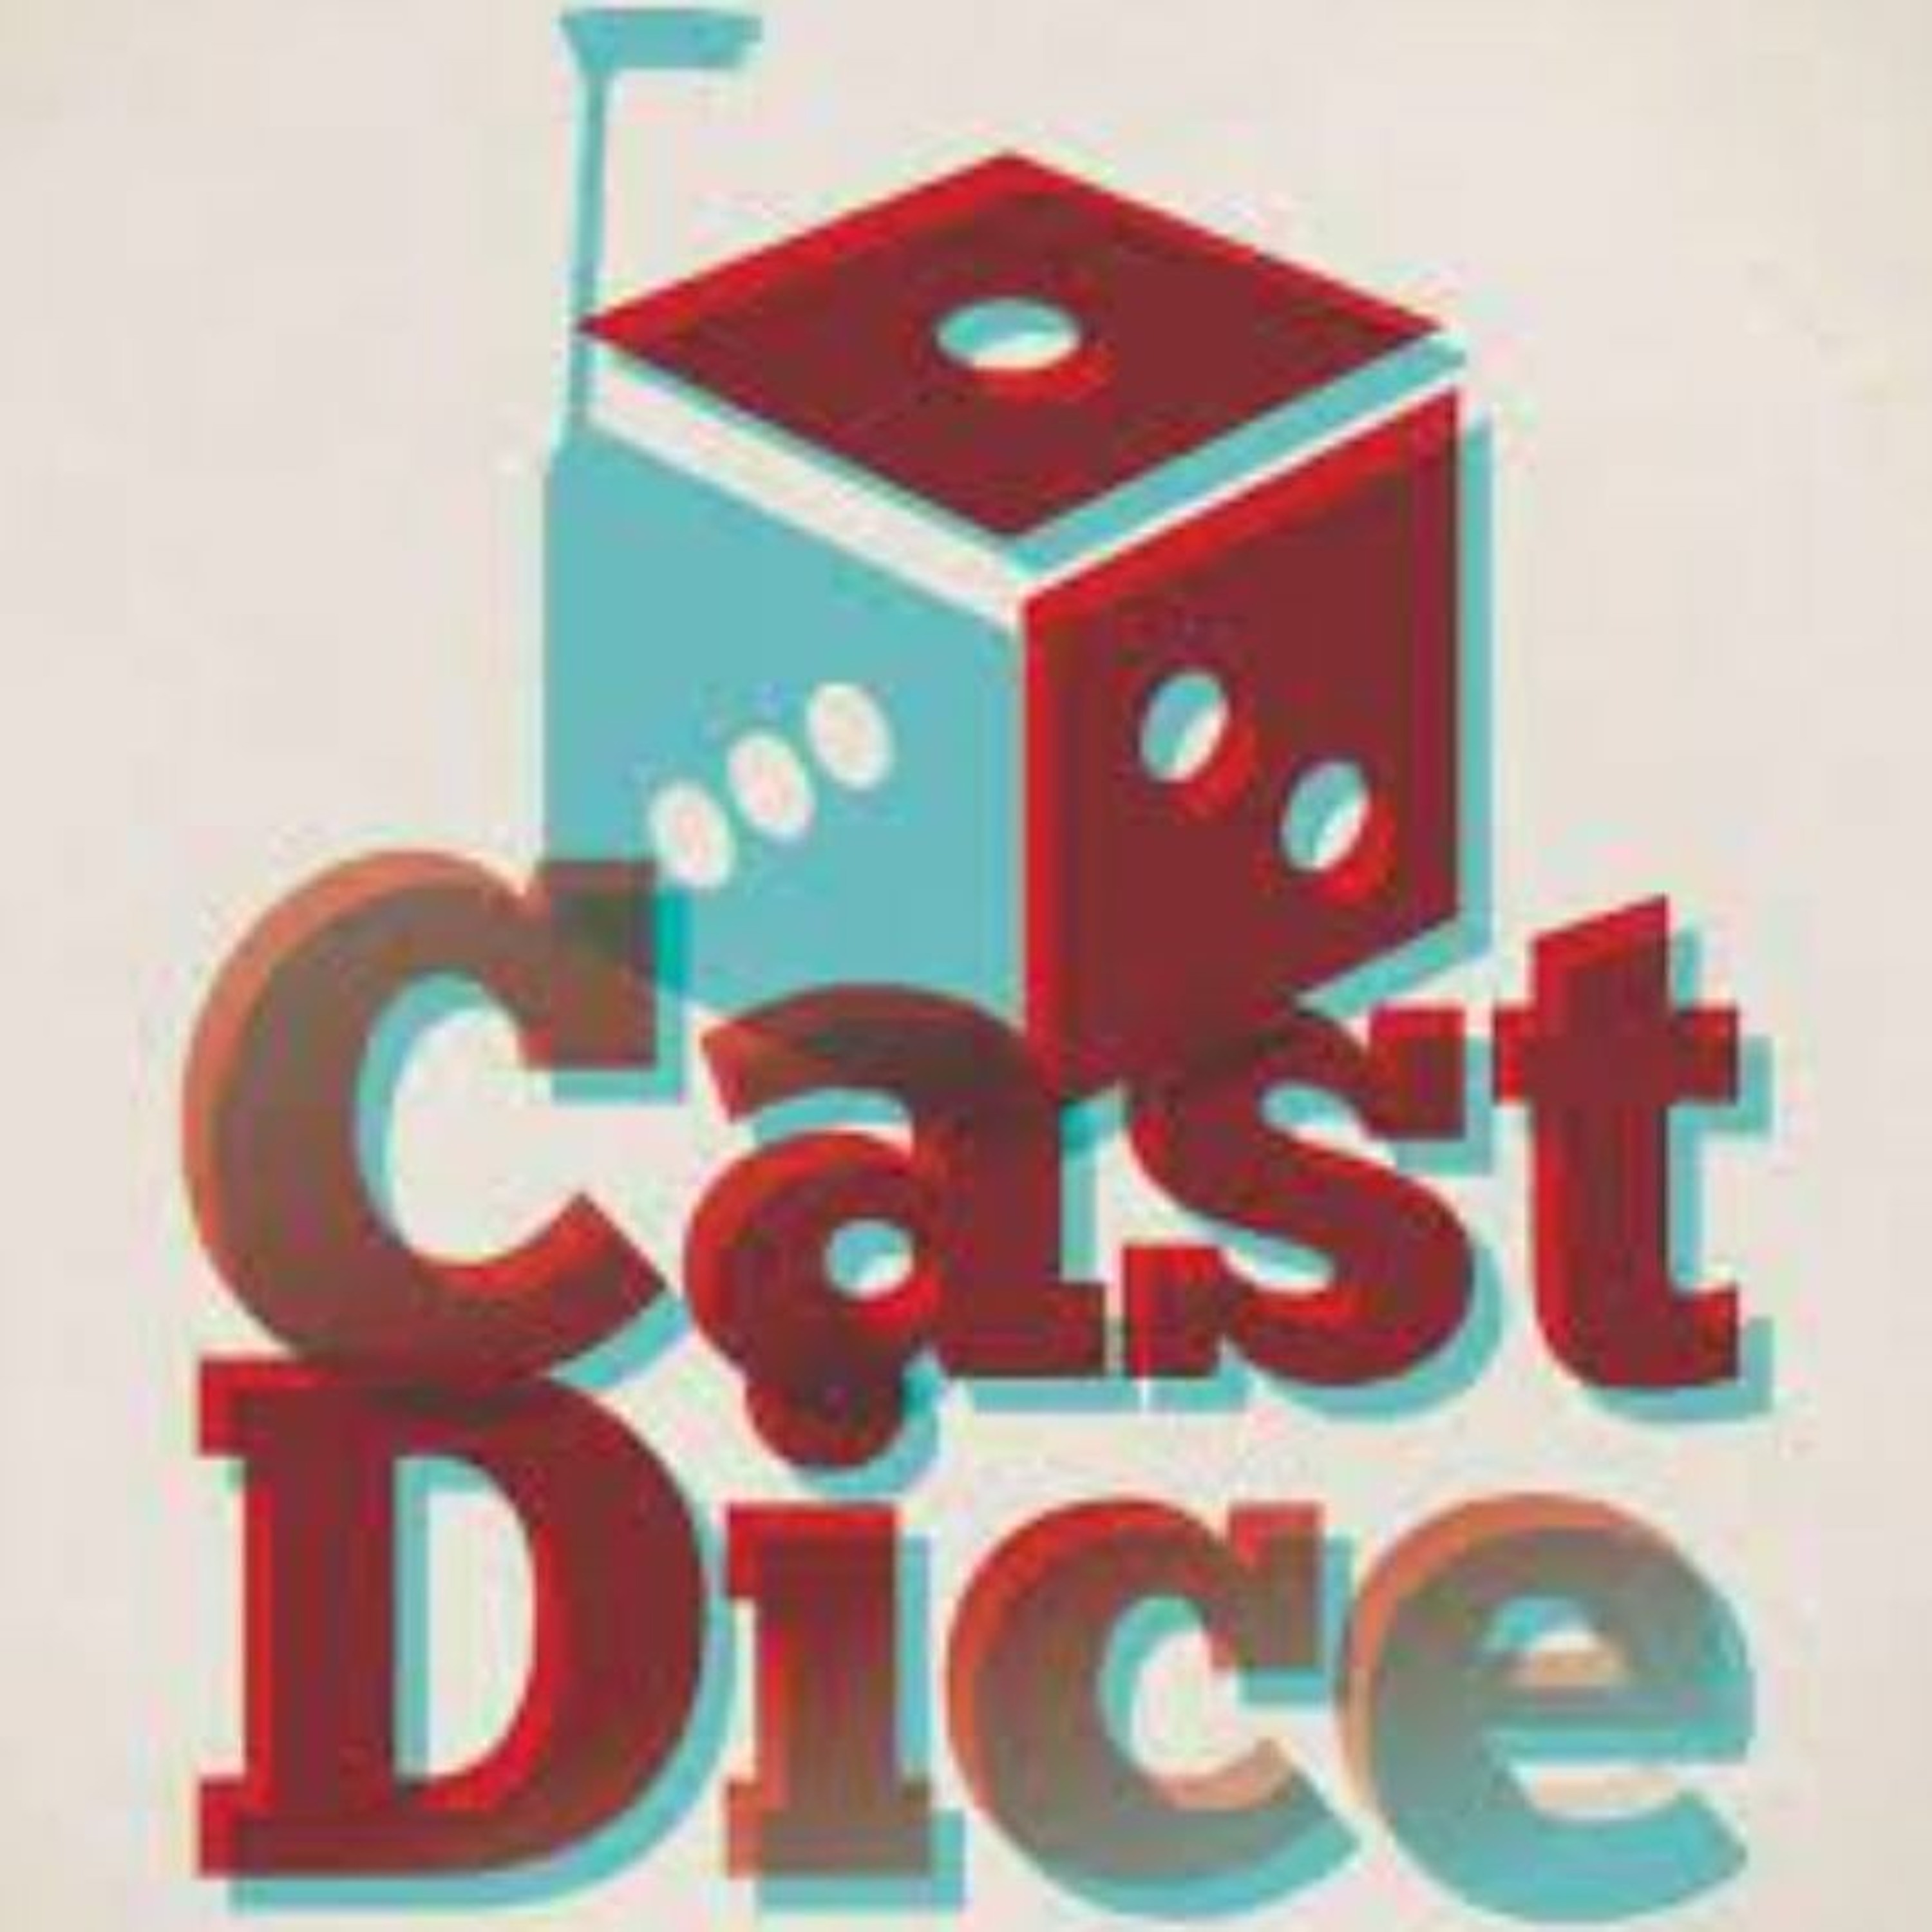 The Cast Dice Podcast - Ep 201 - Operation Bear 2023 (Bolt Action)